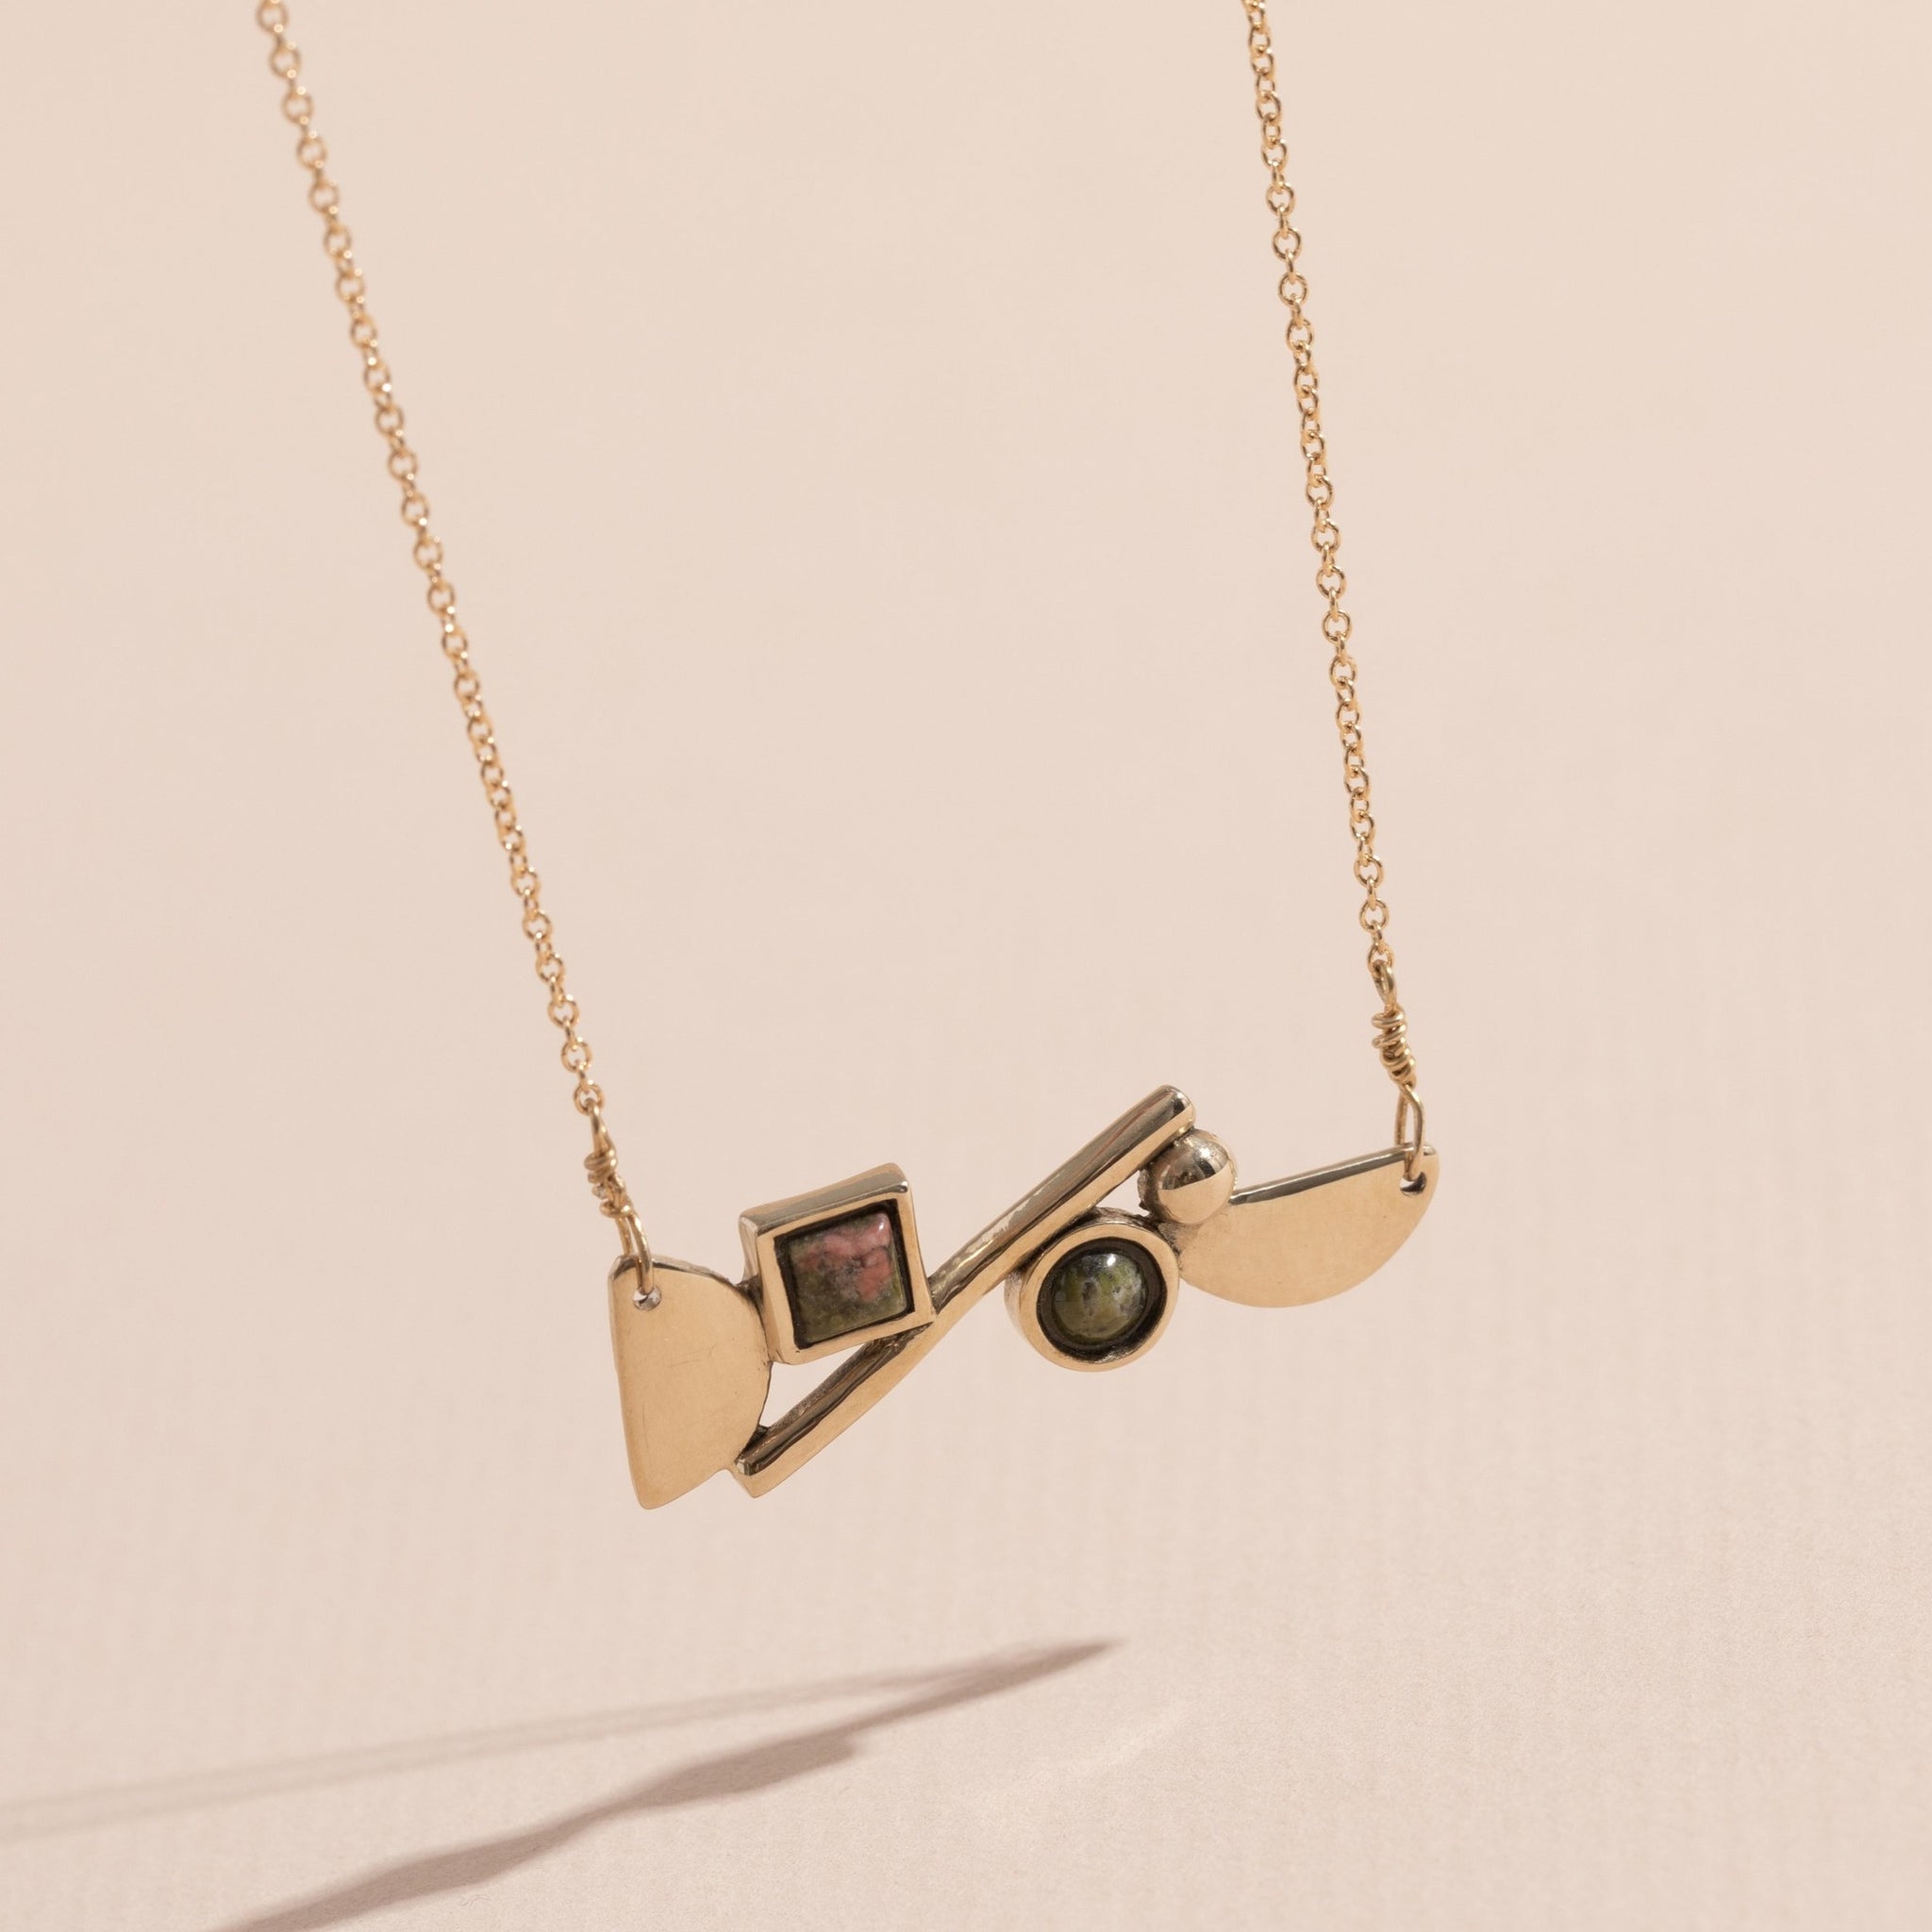 shapes necklace, unakite stones, brass pendant. 